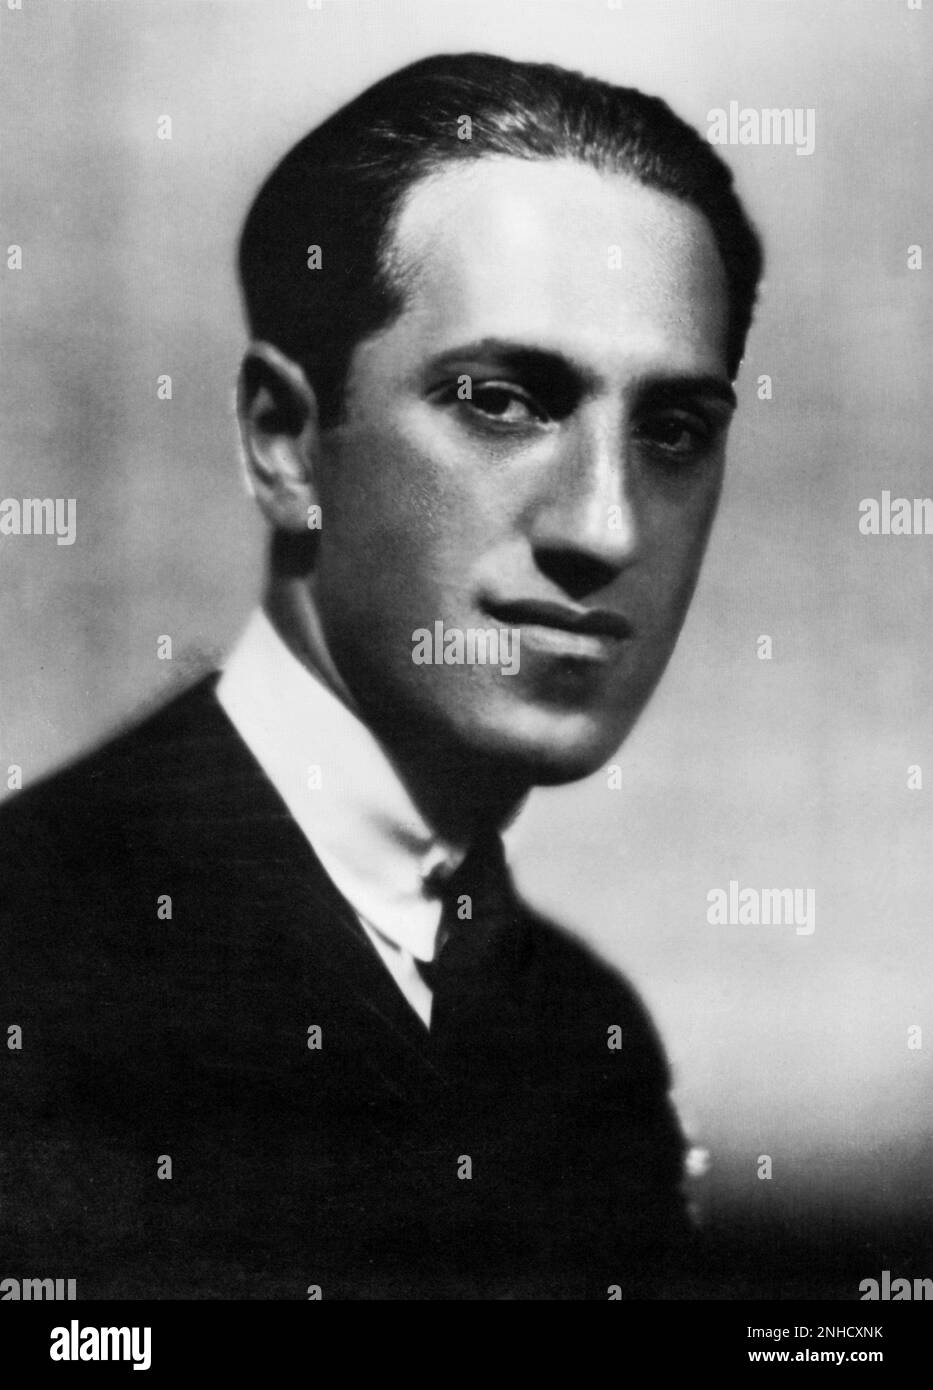 1920's, USA : El pianista y compositor musical estadounidense GEORGE GERSHWIN ( 1898 - 1937 ) - COMPOSITORE - MUSICISTA - MUSICA JAZZ - CLASICA - CLASICA - CLASSIC - COLLETE ---- ARCHIVO GBB Foto de stock